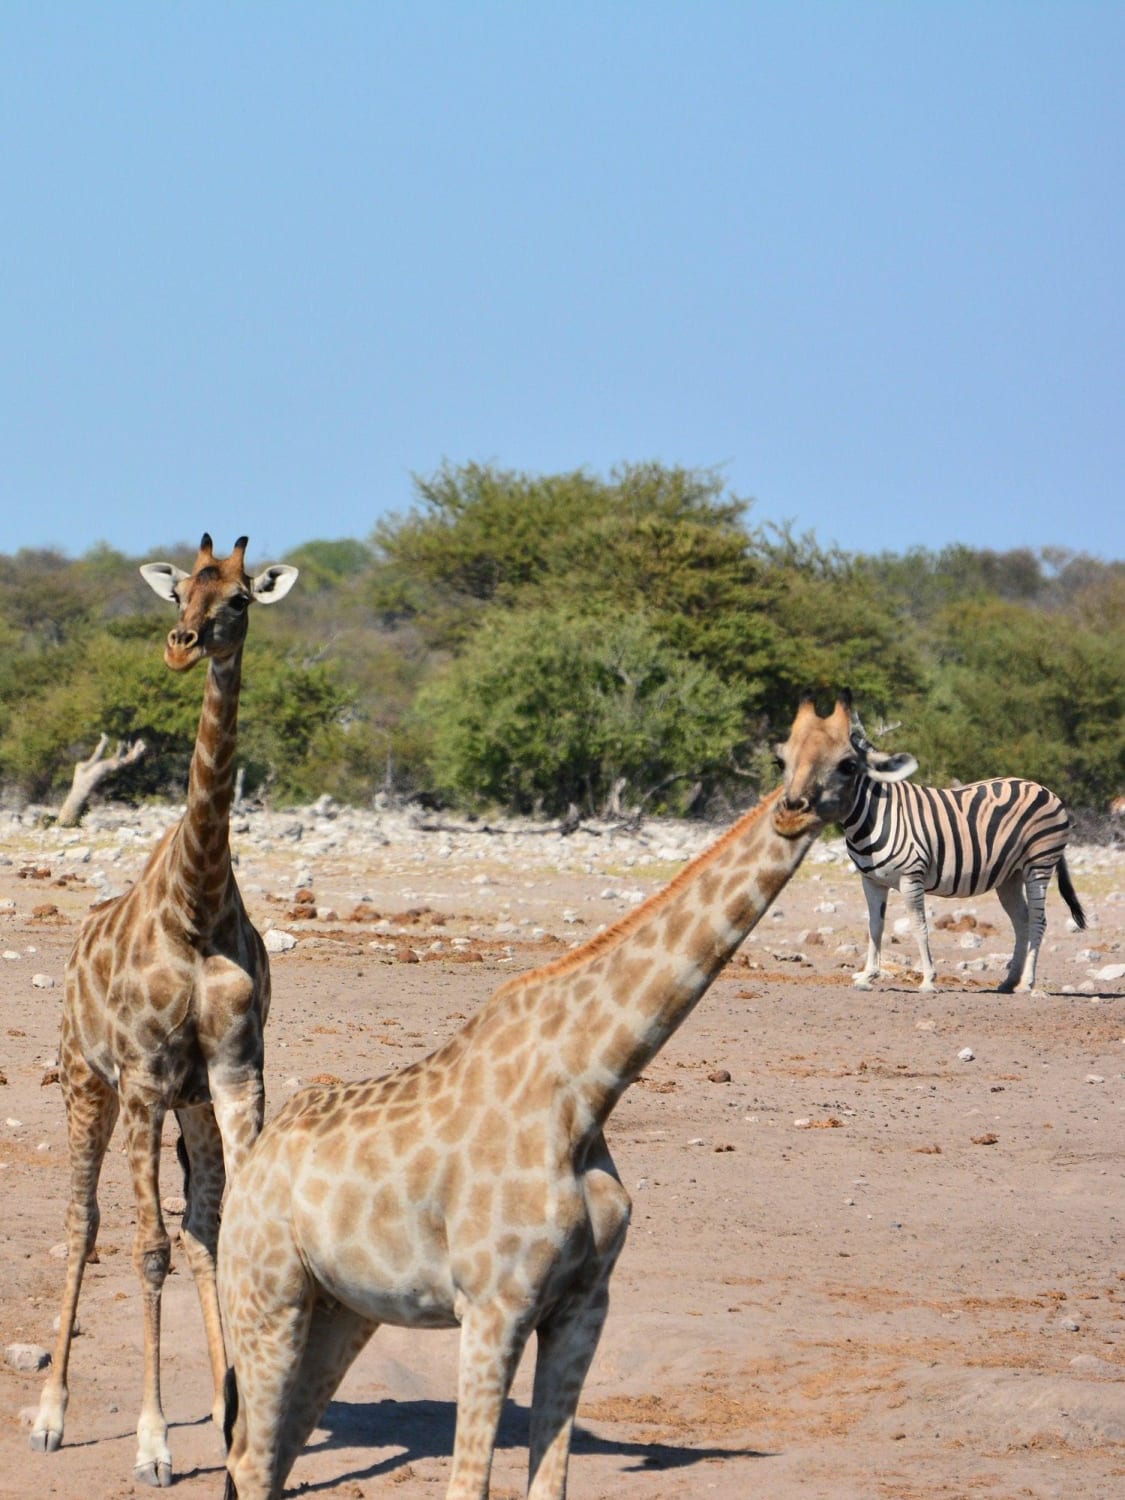 PsBattle: giraffe photobombing a zebra